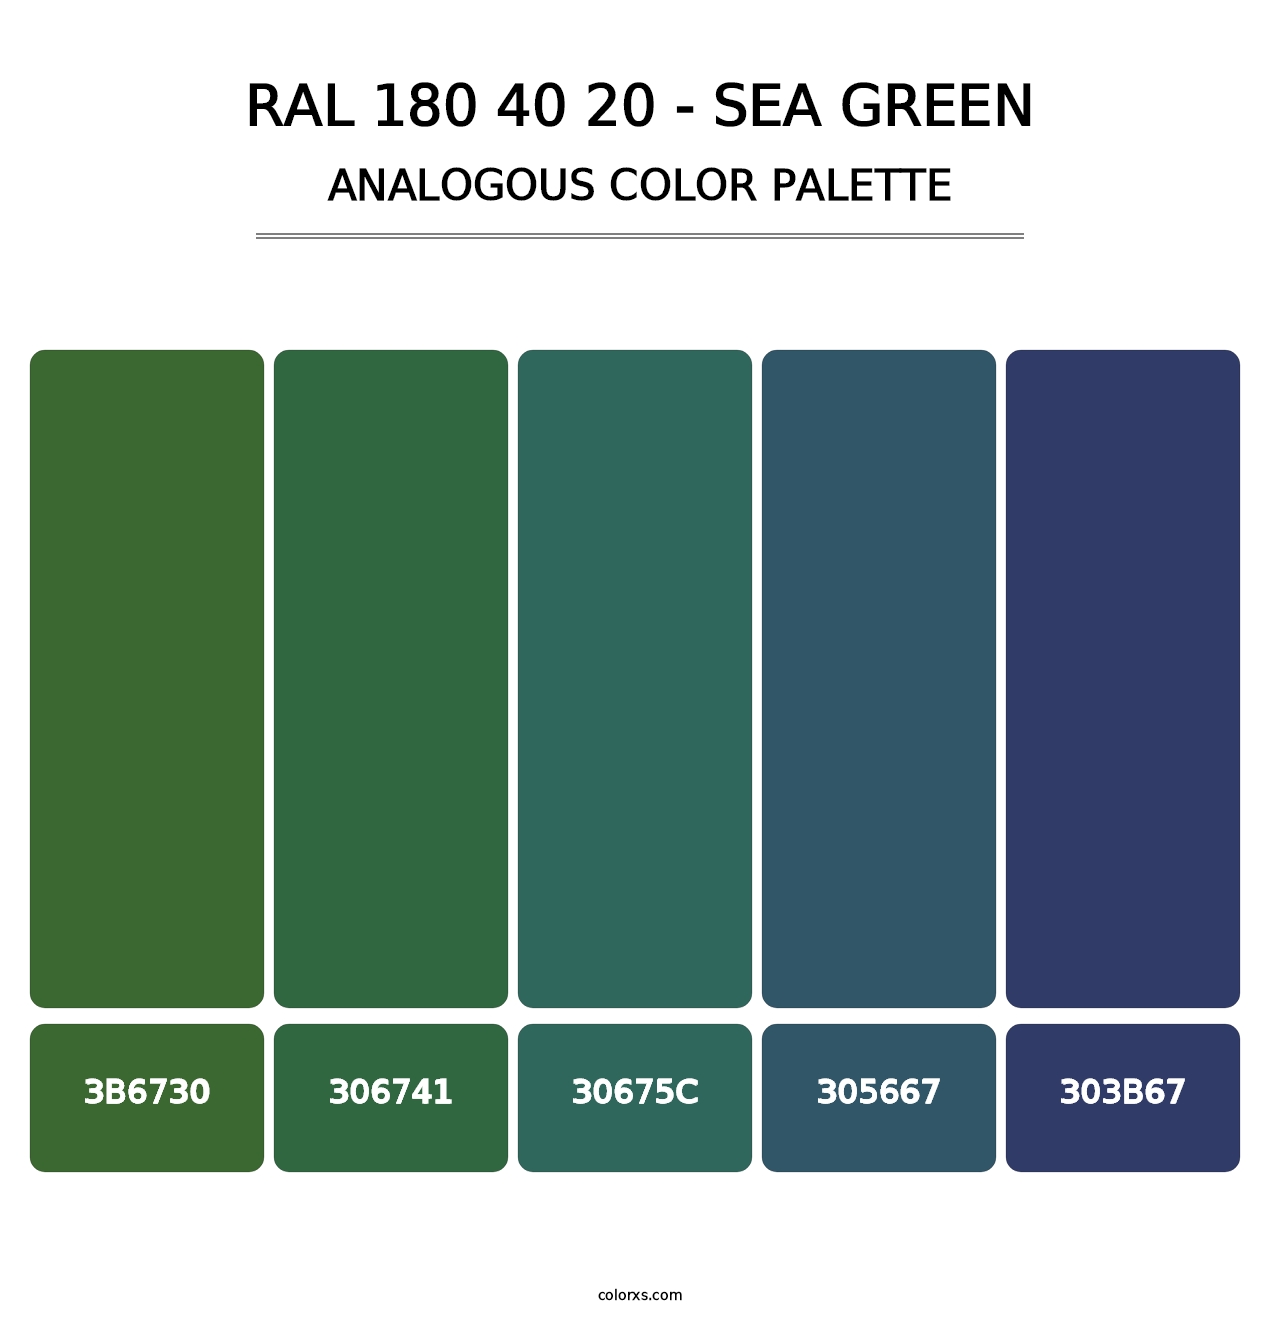 RAL 180 40 20 - Sea Green - Analogous Color Palette